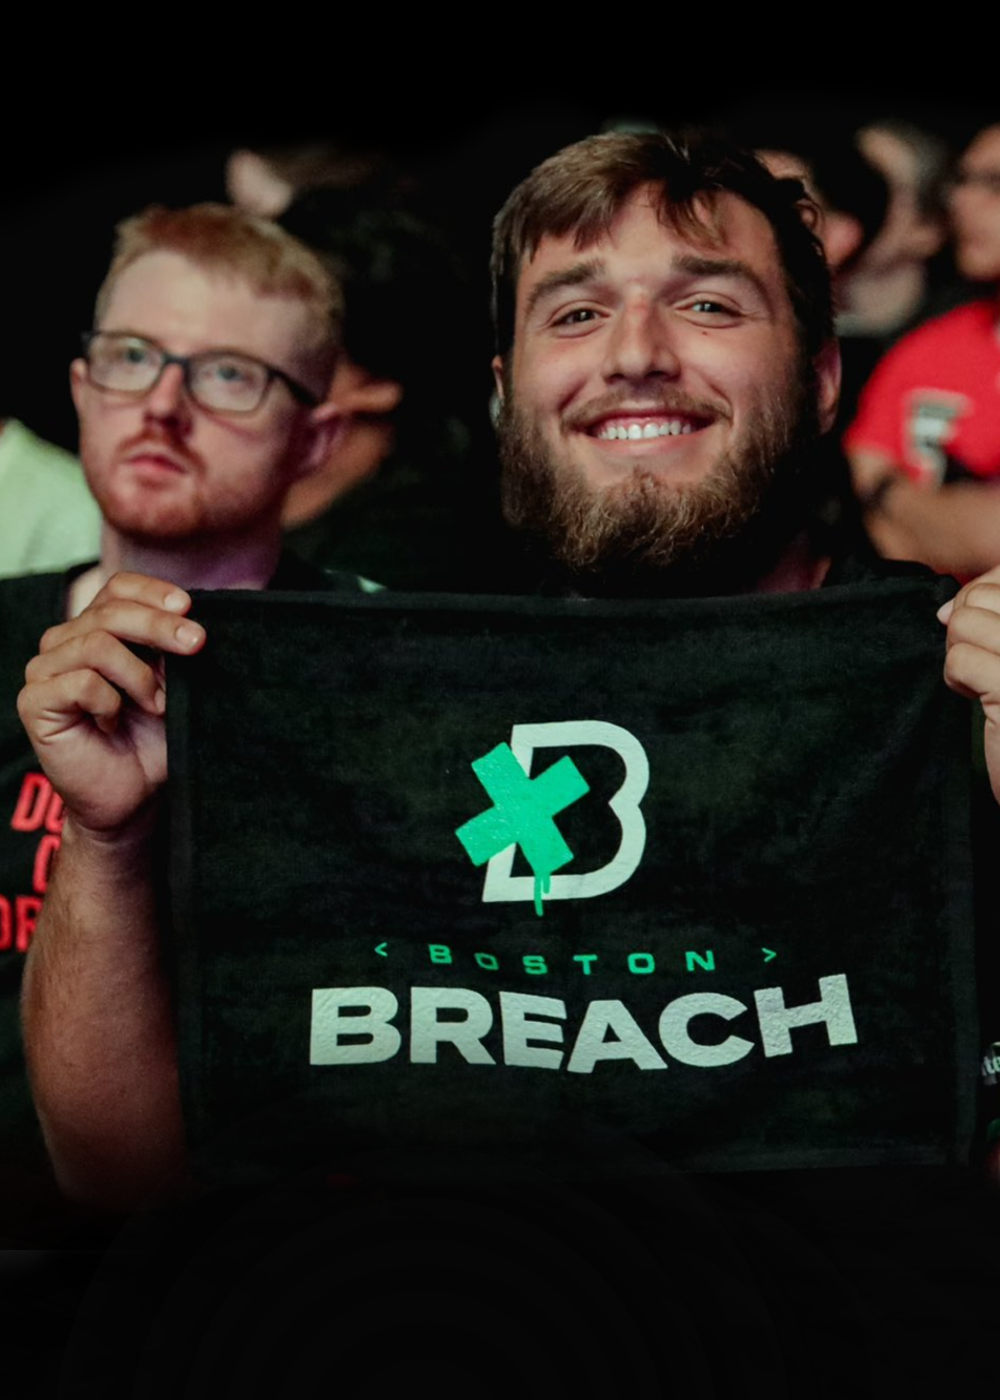 Boston Breach Fan with Boston Breach Towel